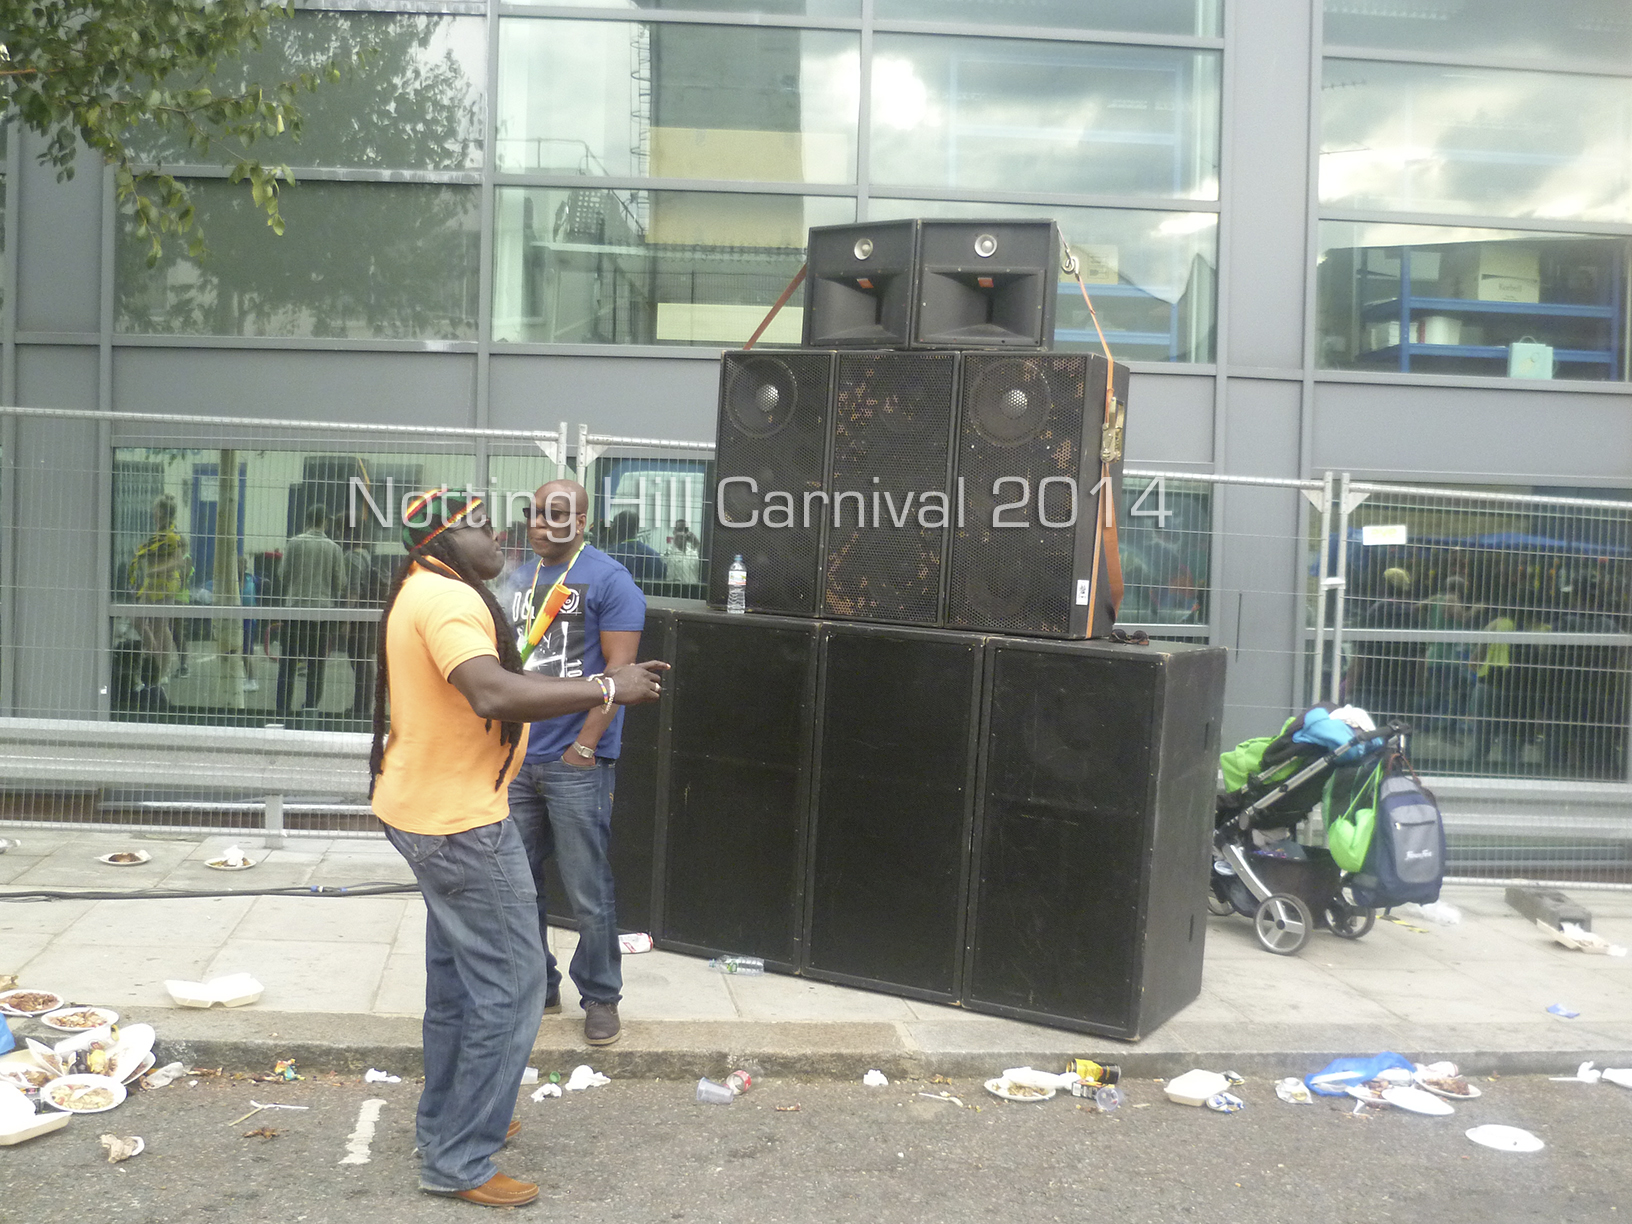 Notting-Hill-Carnival-2014-Street-Sound-System-24